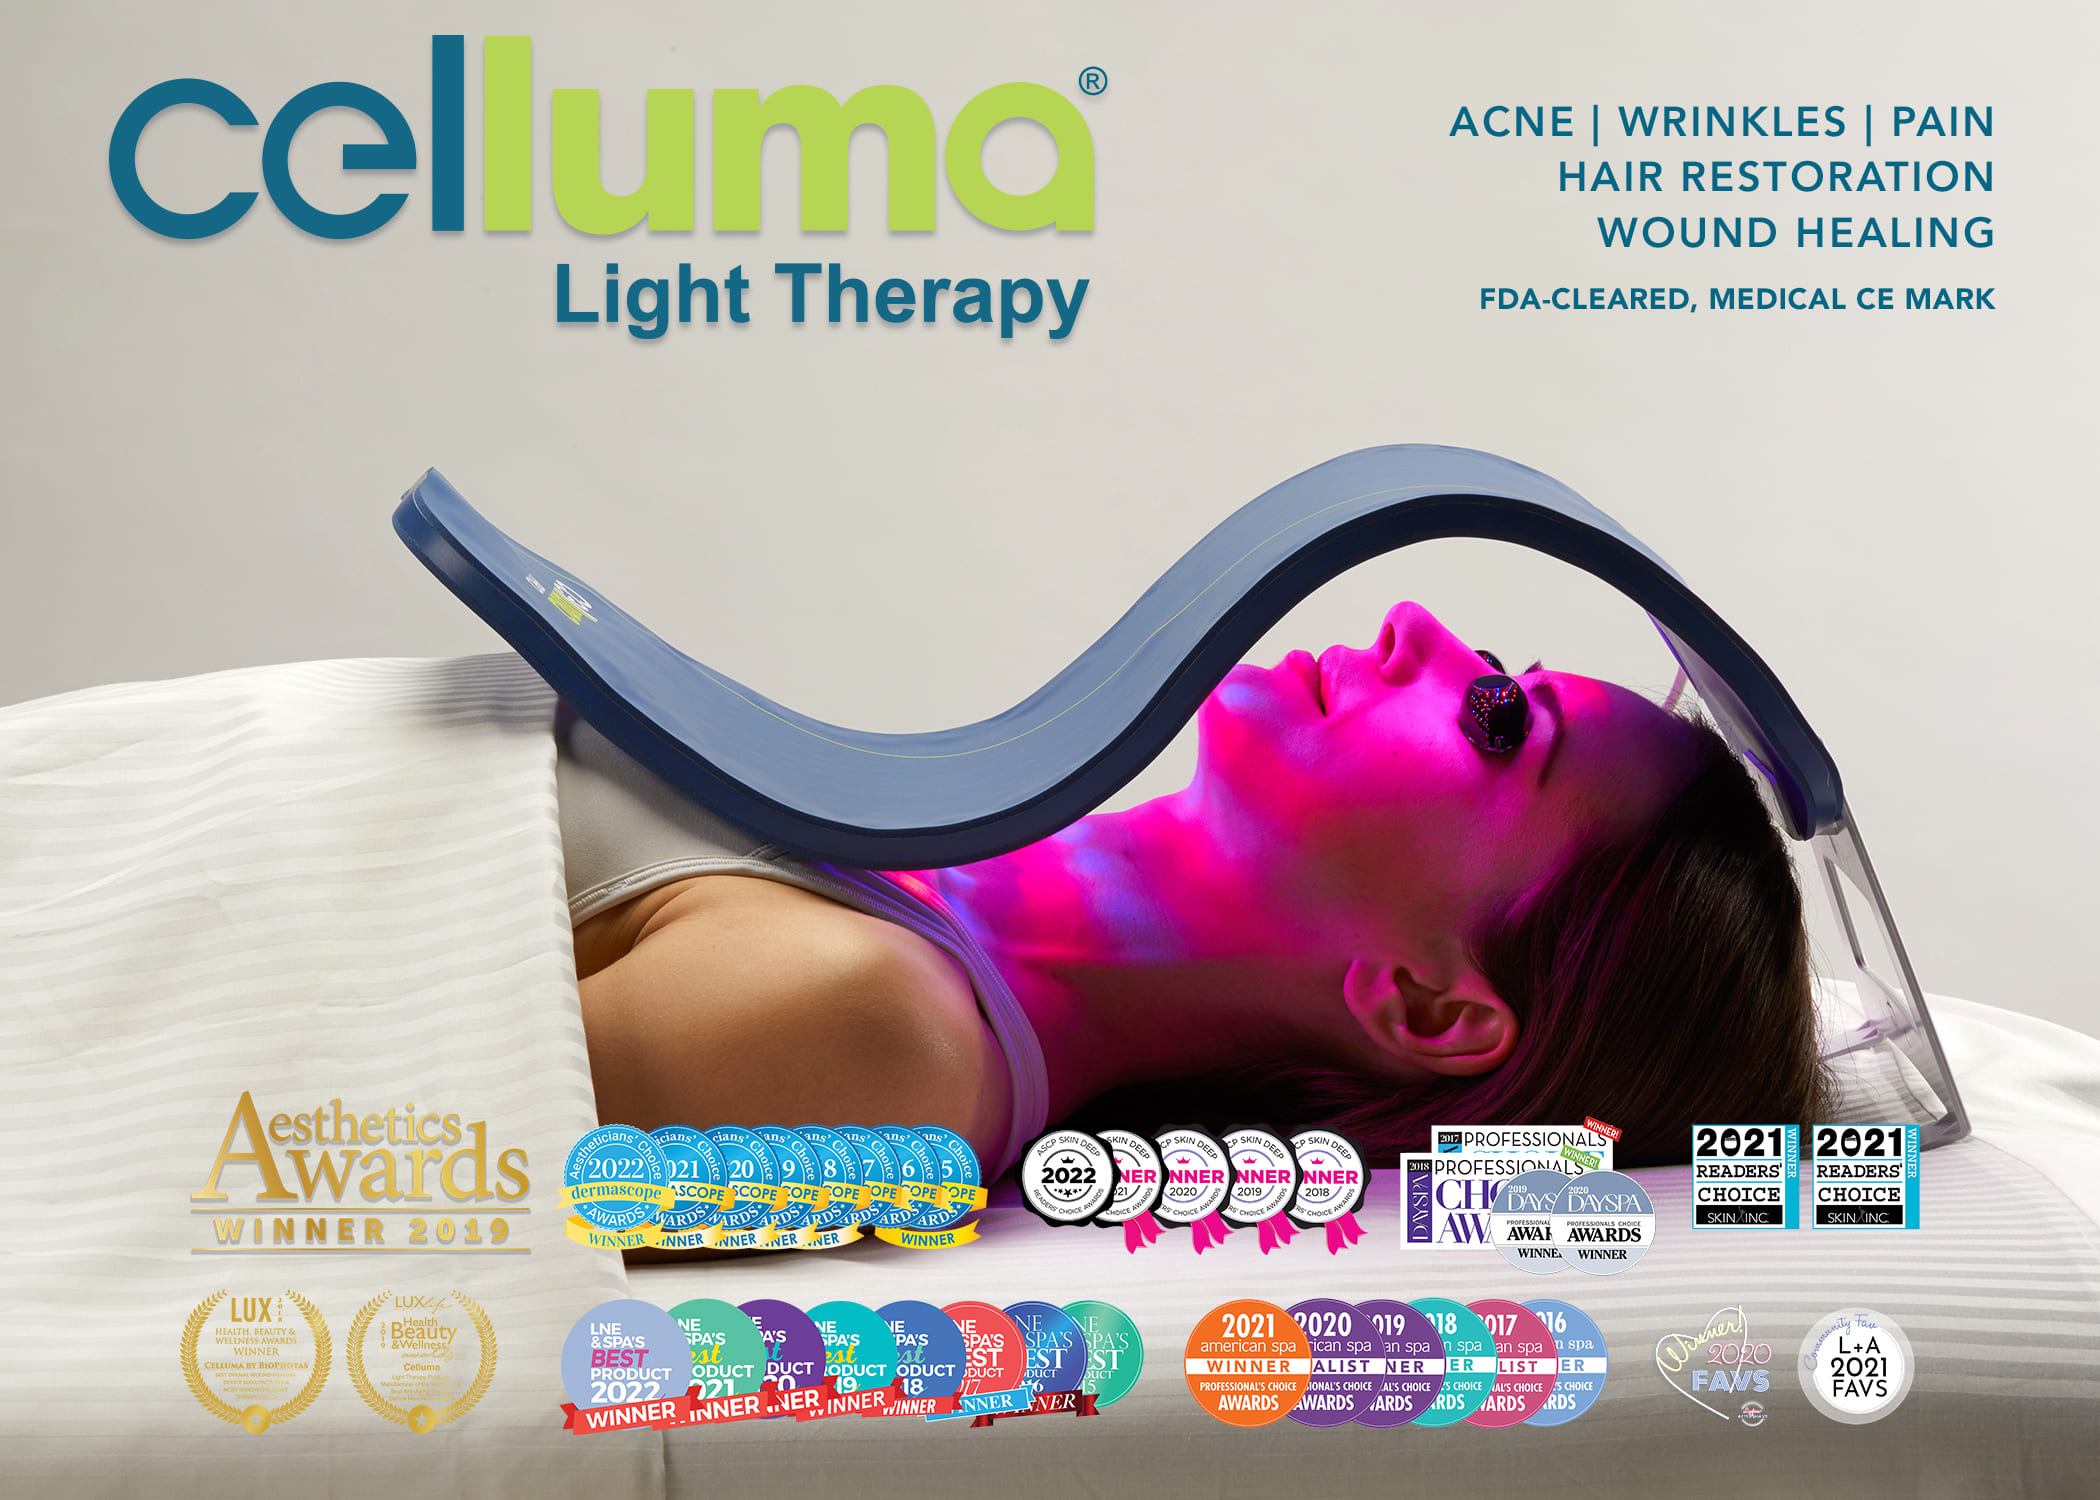 Celluma Light Therapy awards